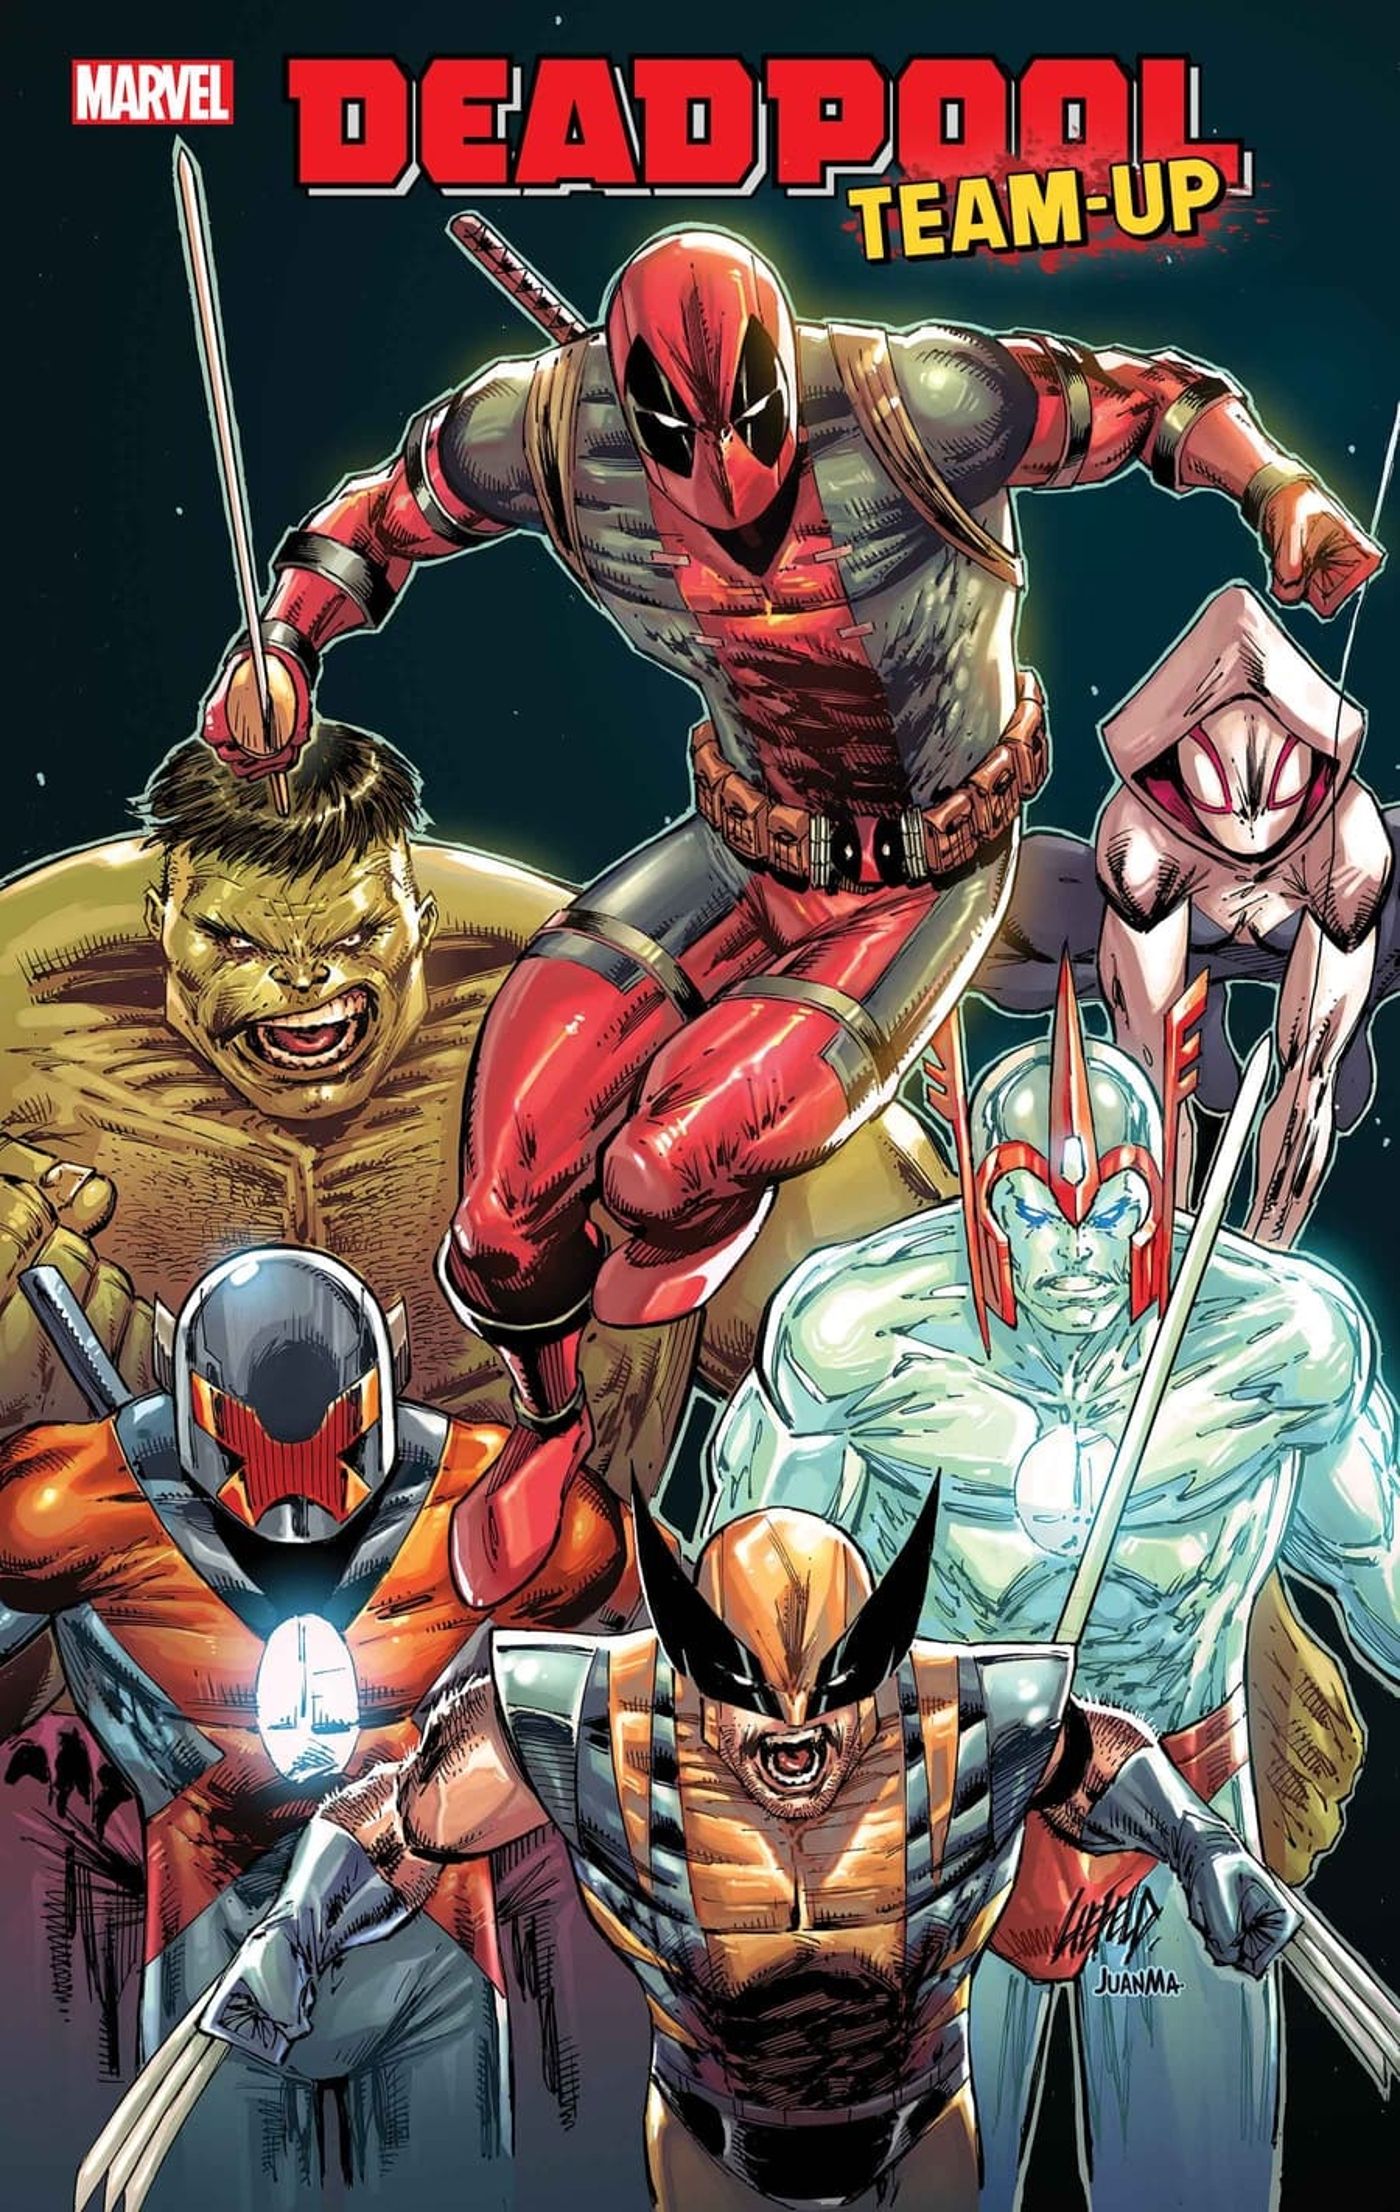 Arte da capa do Deadpool Team-Up #1 com Deadpool, Hulk, Wolverine, Spider-Gwen, Major X e Crystar